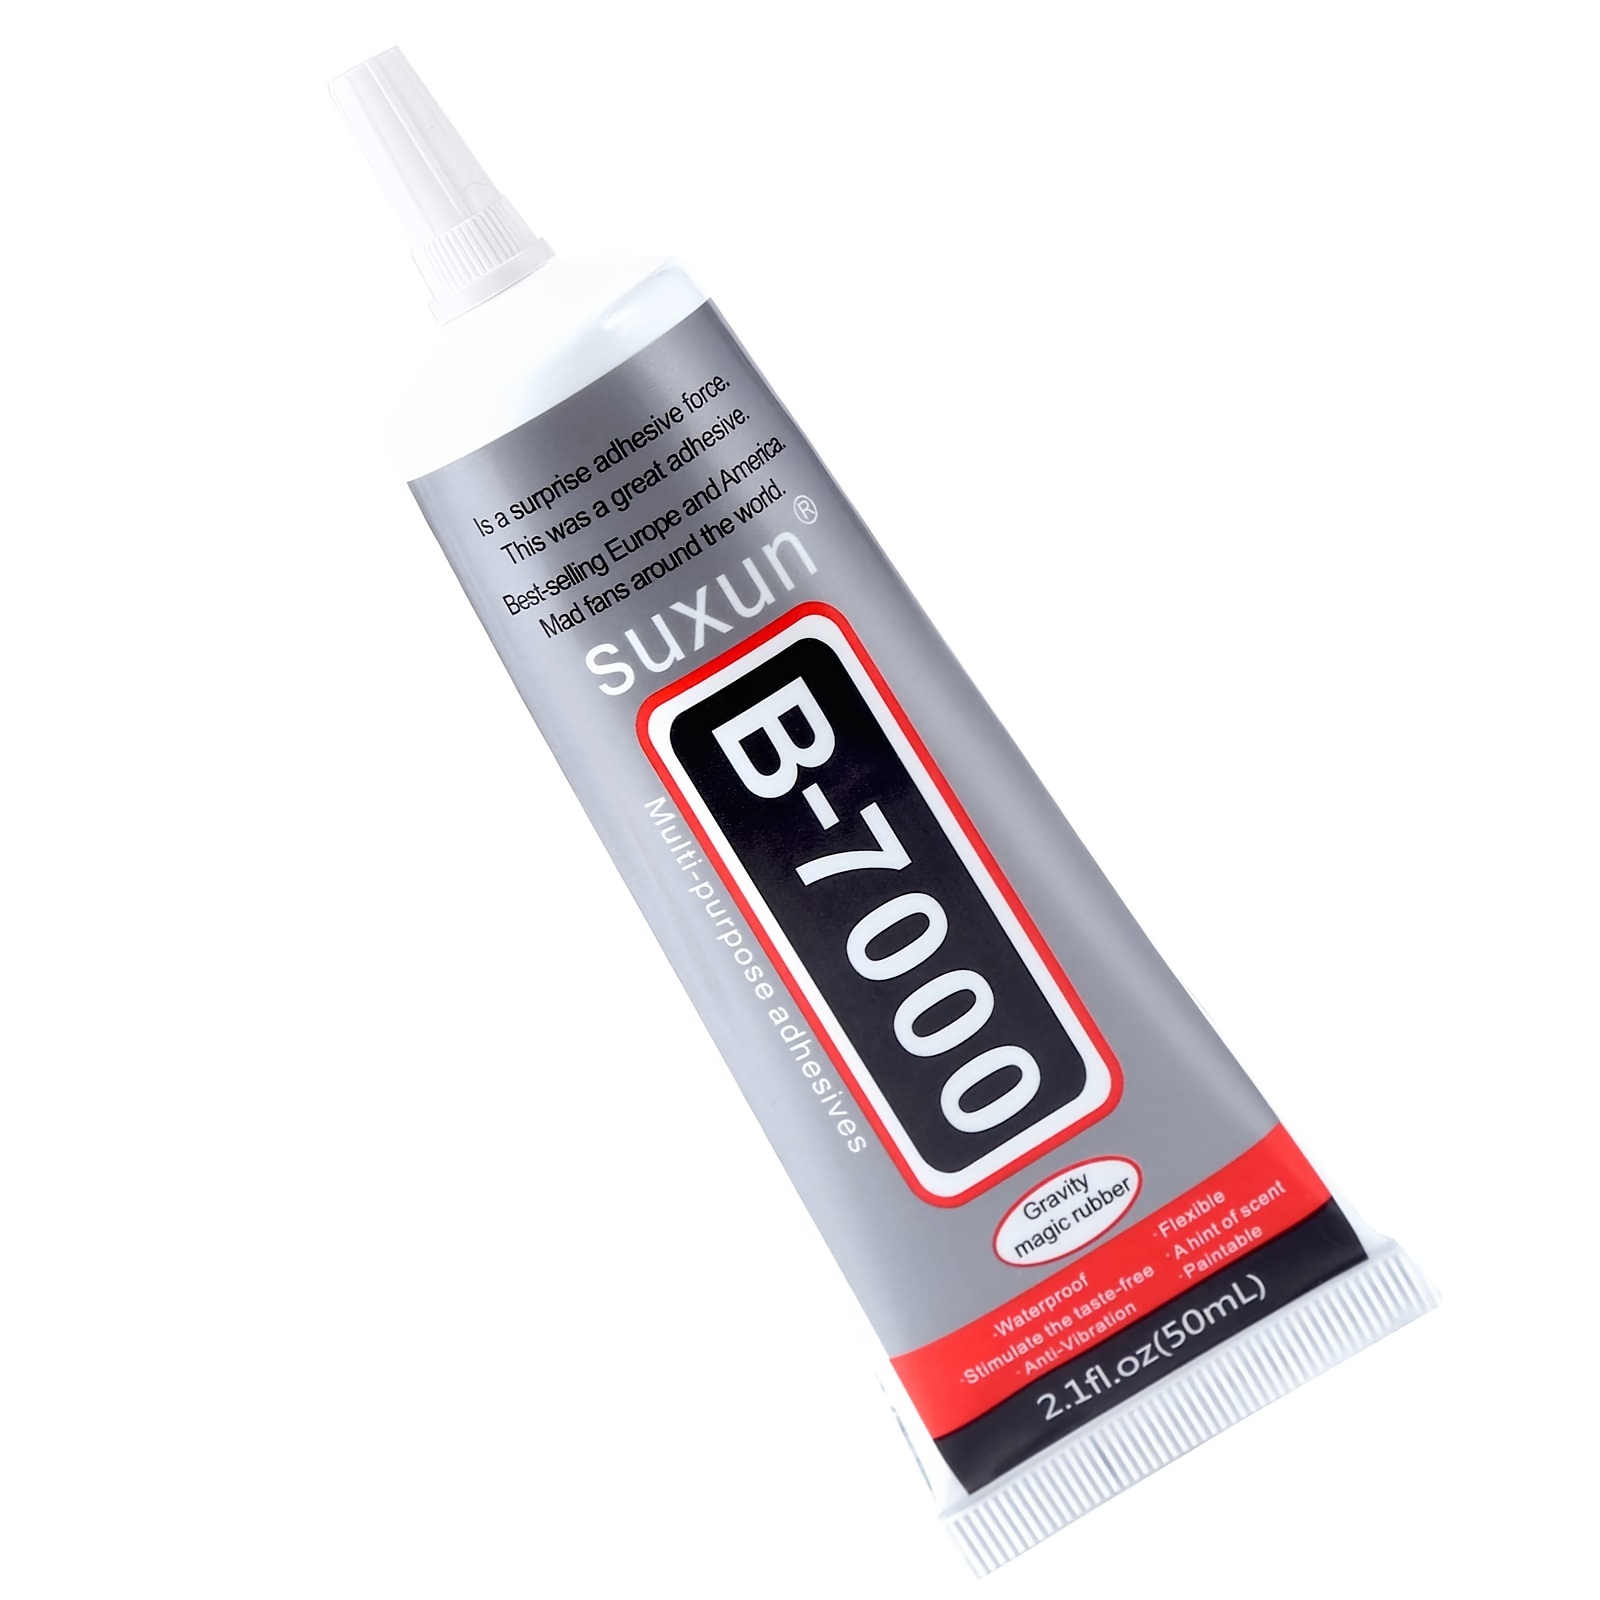 B7000 Super Glue Adhesive, Multi-Function Glues, Transperant Paste Adhesive